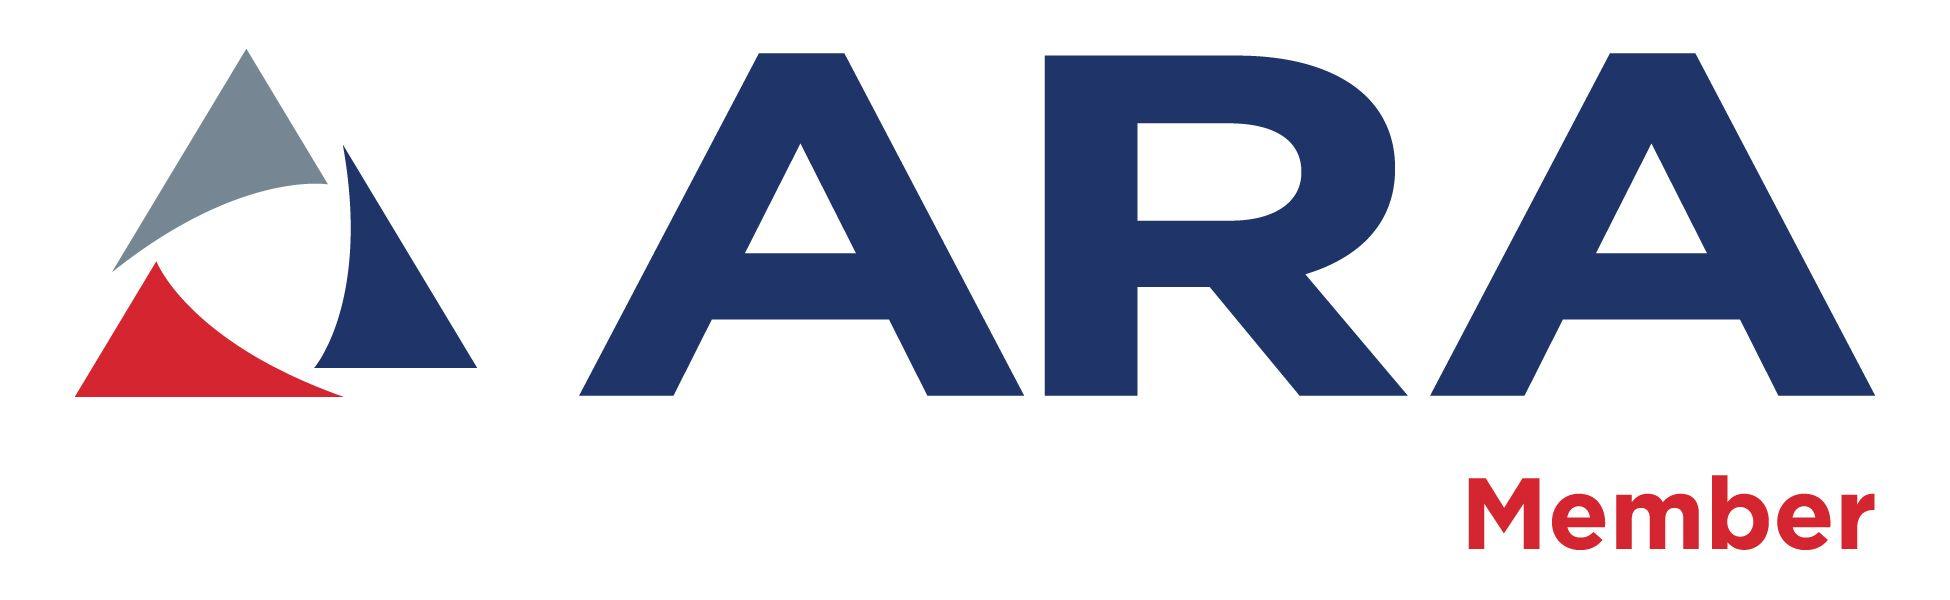 Member Logo - ARA Logos